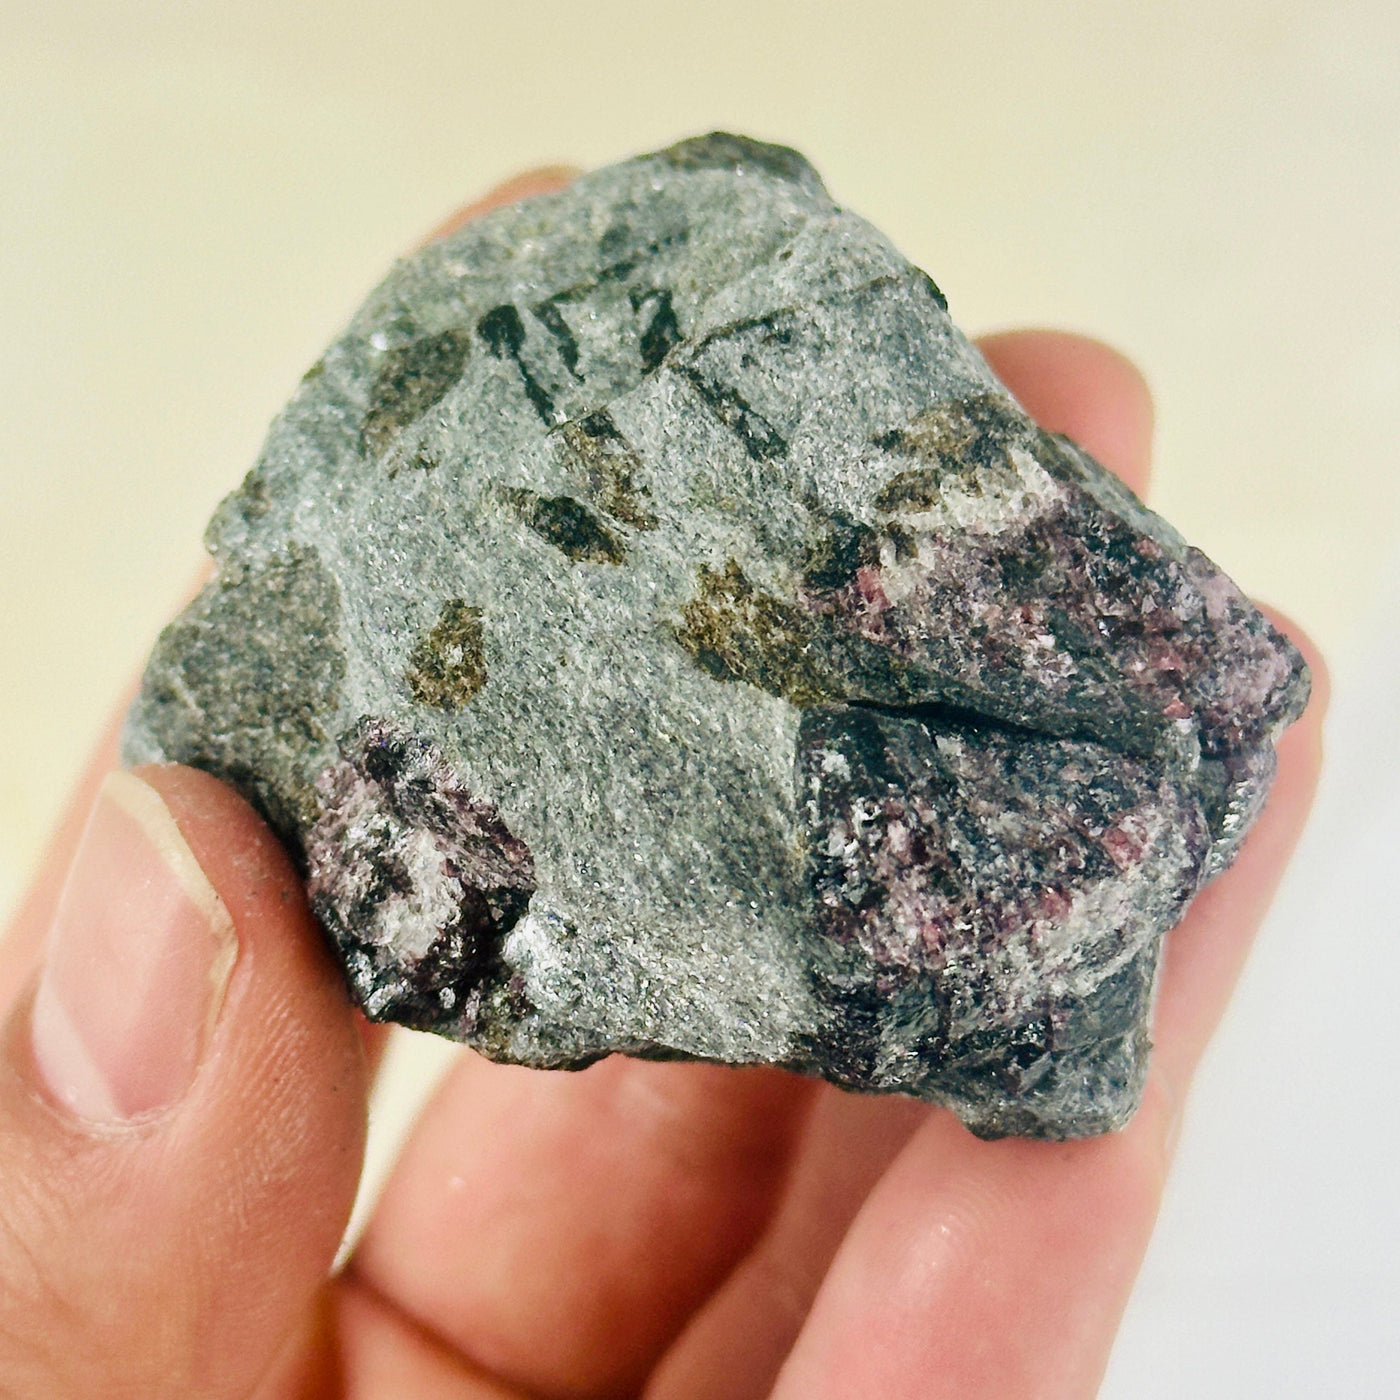 Garnet on Hematite Matrix - Natural Crystal close up for detail